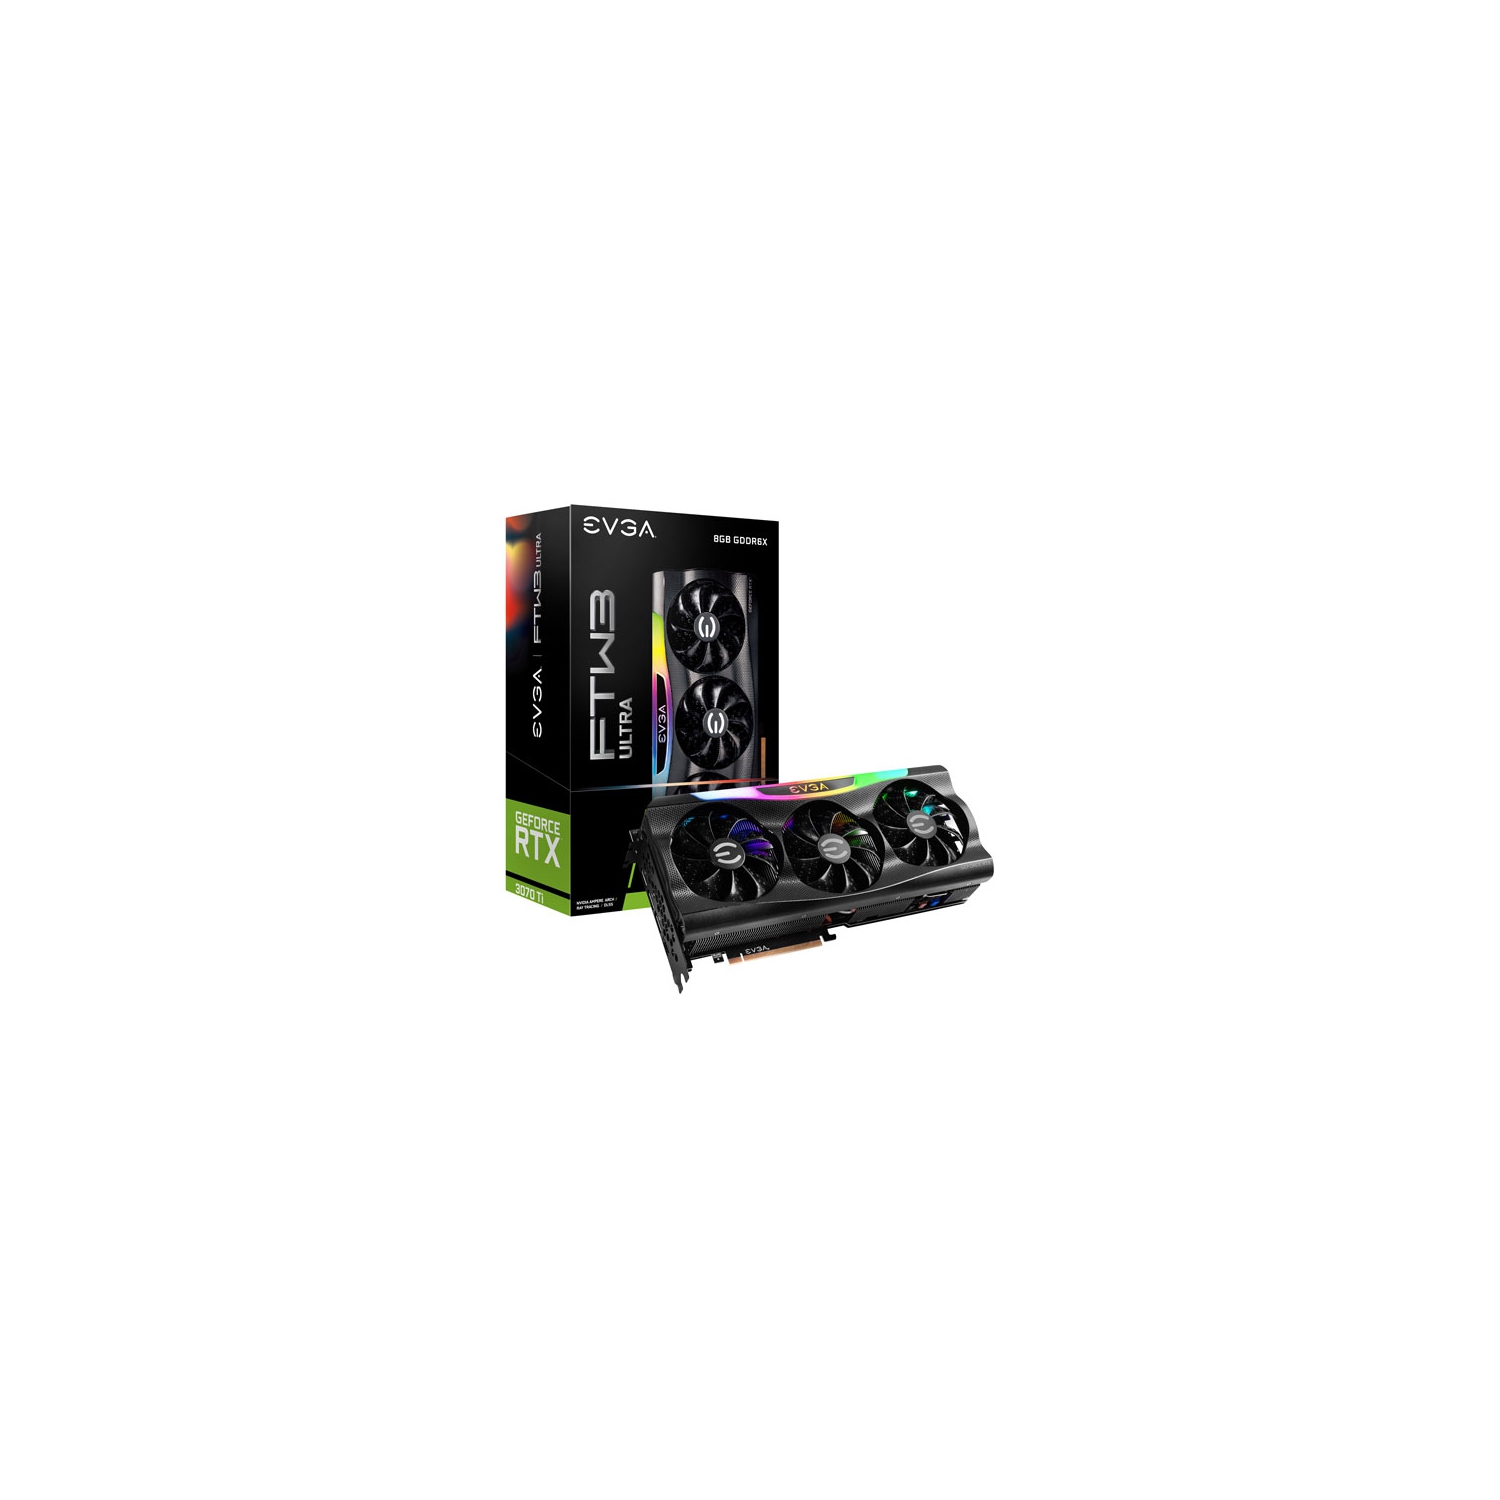 Refurbished (Good) - EVGA GeForce RTX 3070 Ti 8GB GDDR6X Video Card